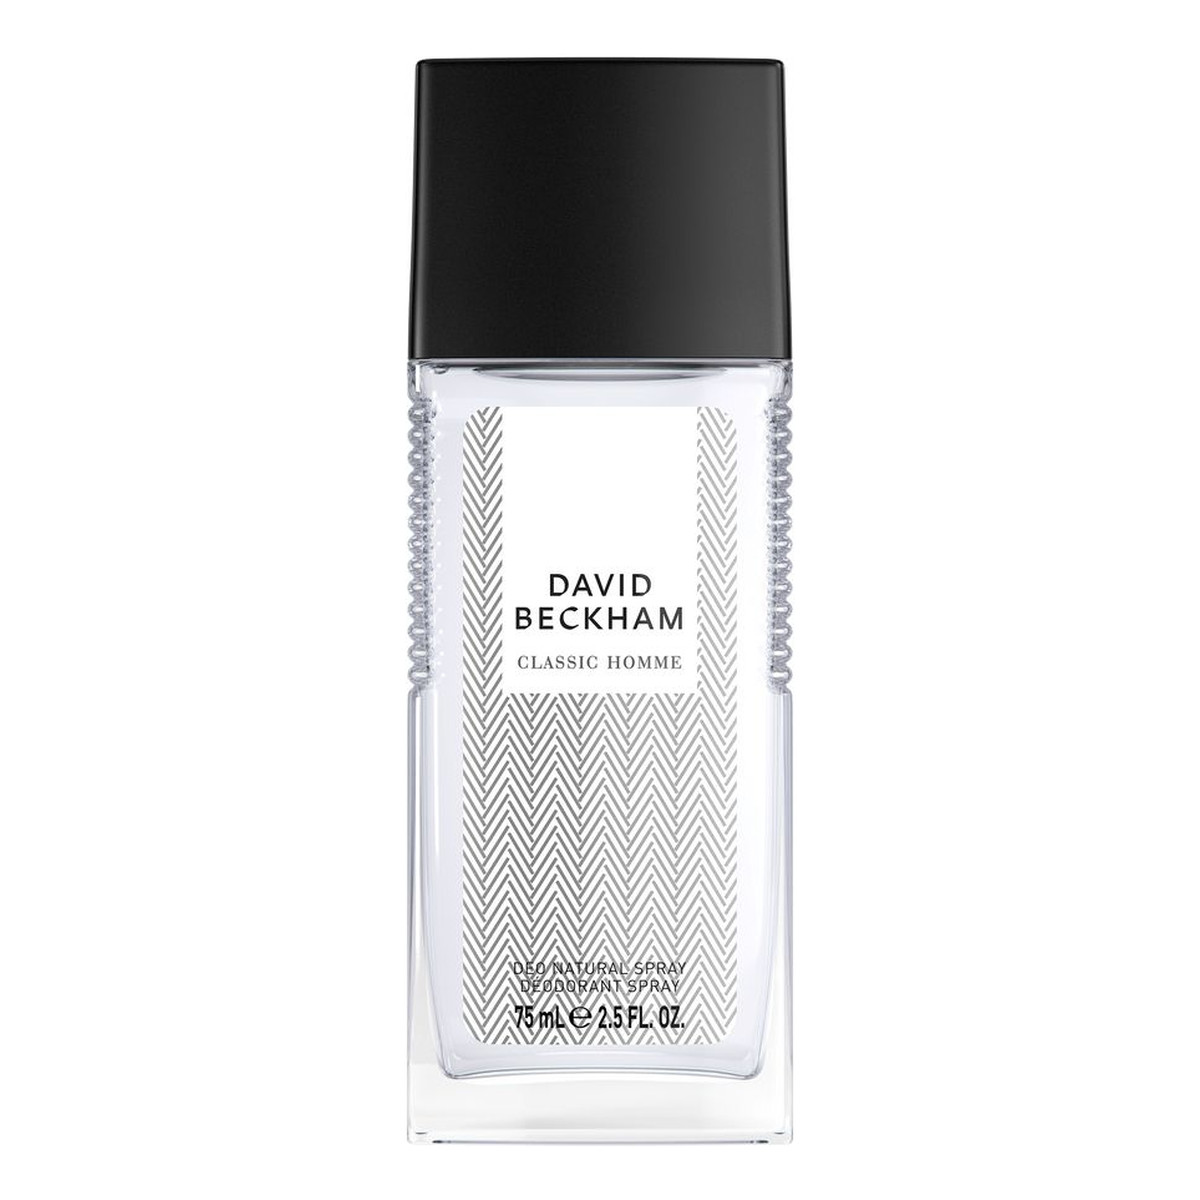 David Beckham Classic Homme Dezodorant w naturalnym sprayu 75ml